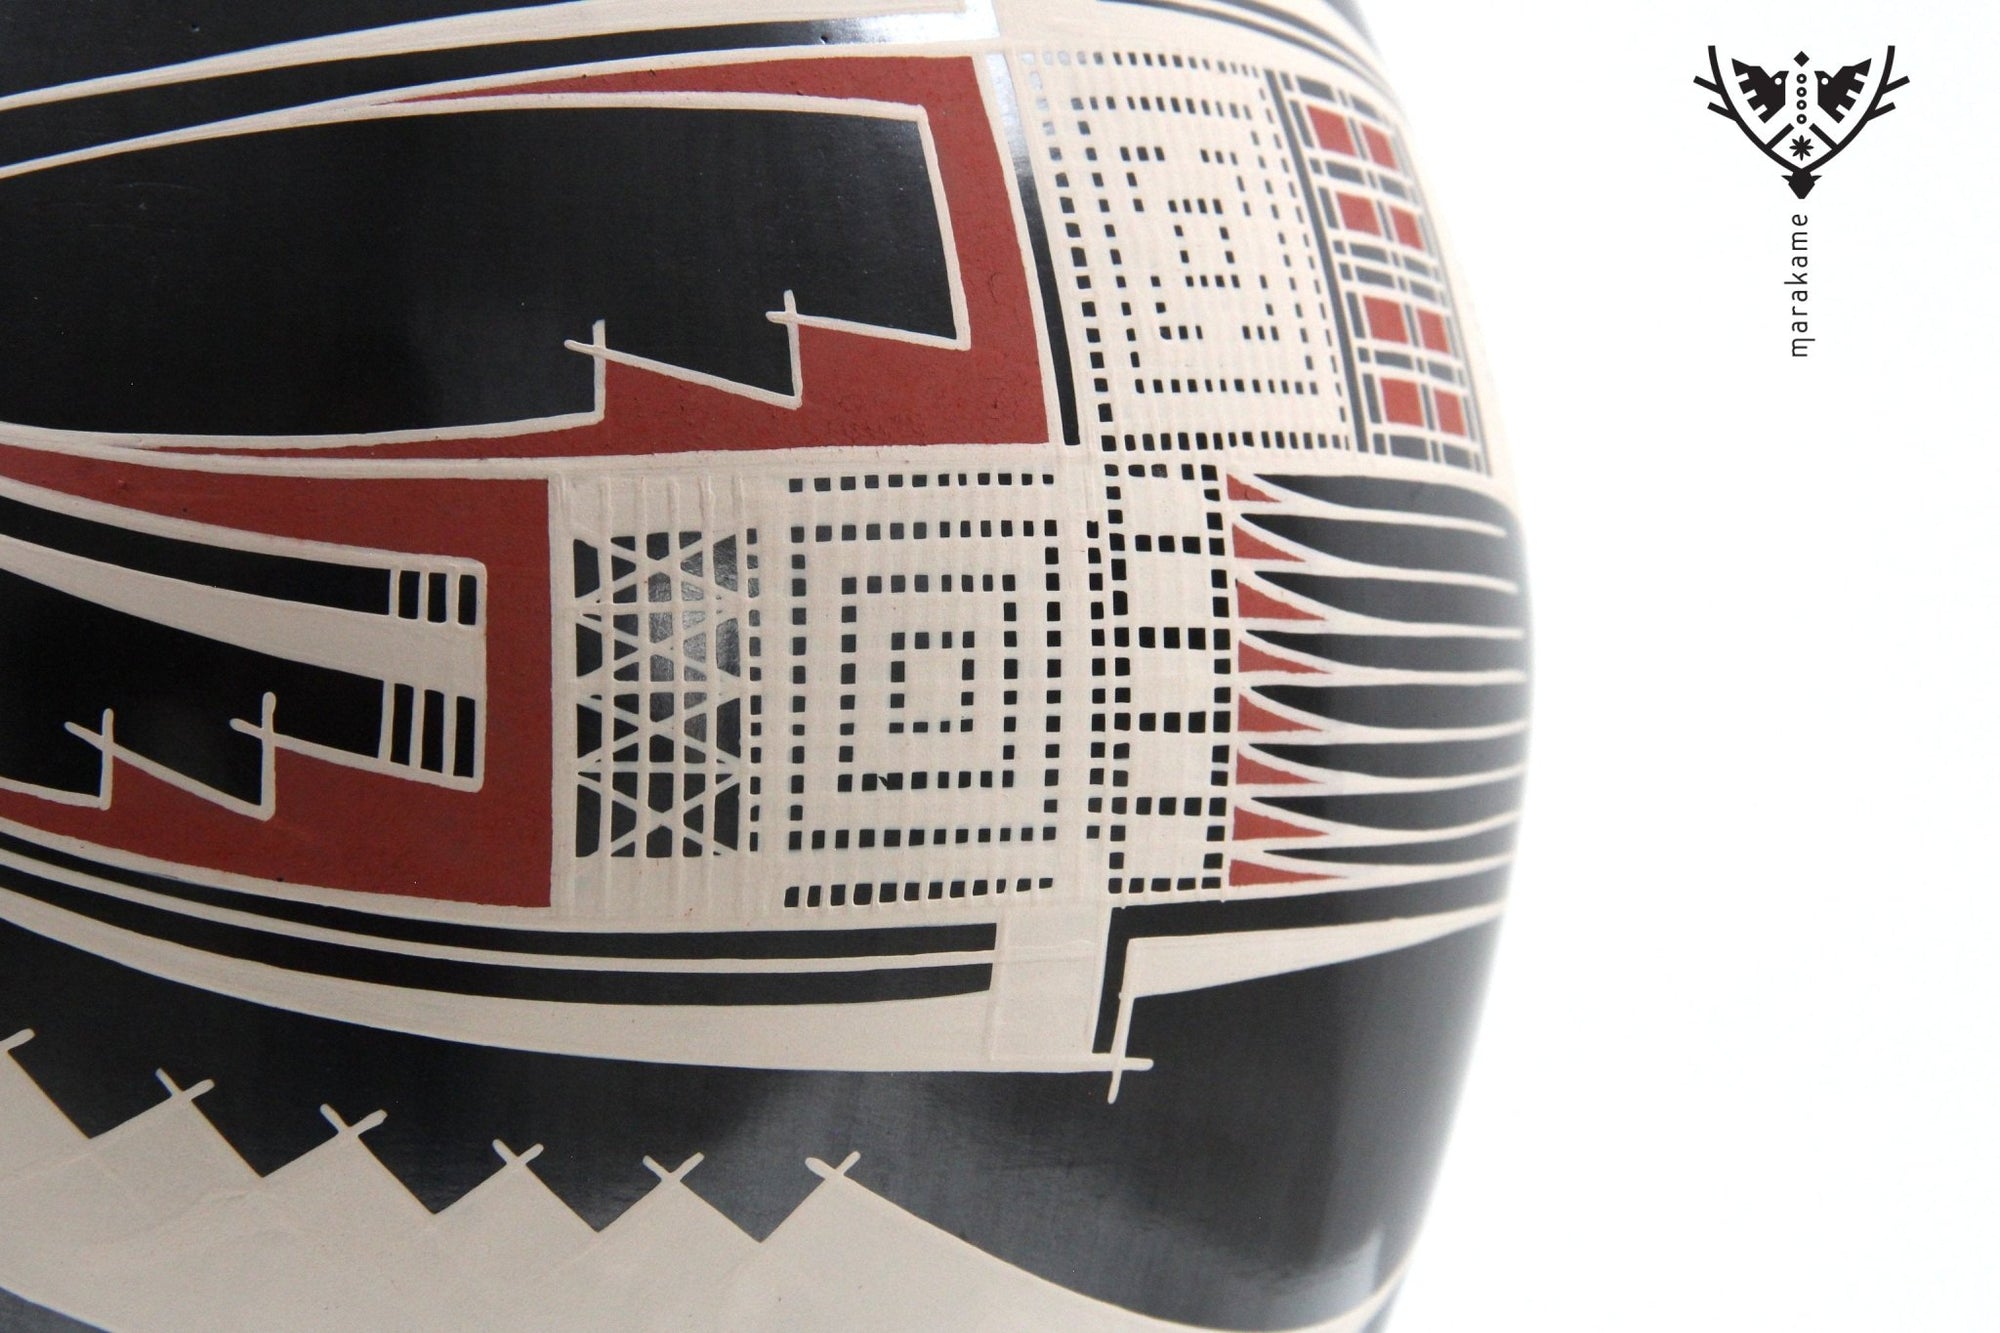 Mata Ortiz ceramics - Black piece with traditional painting - Huichol art - Marakame